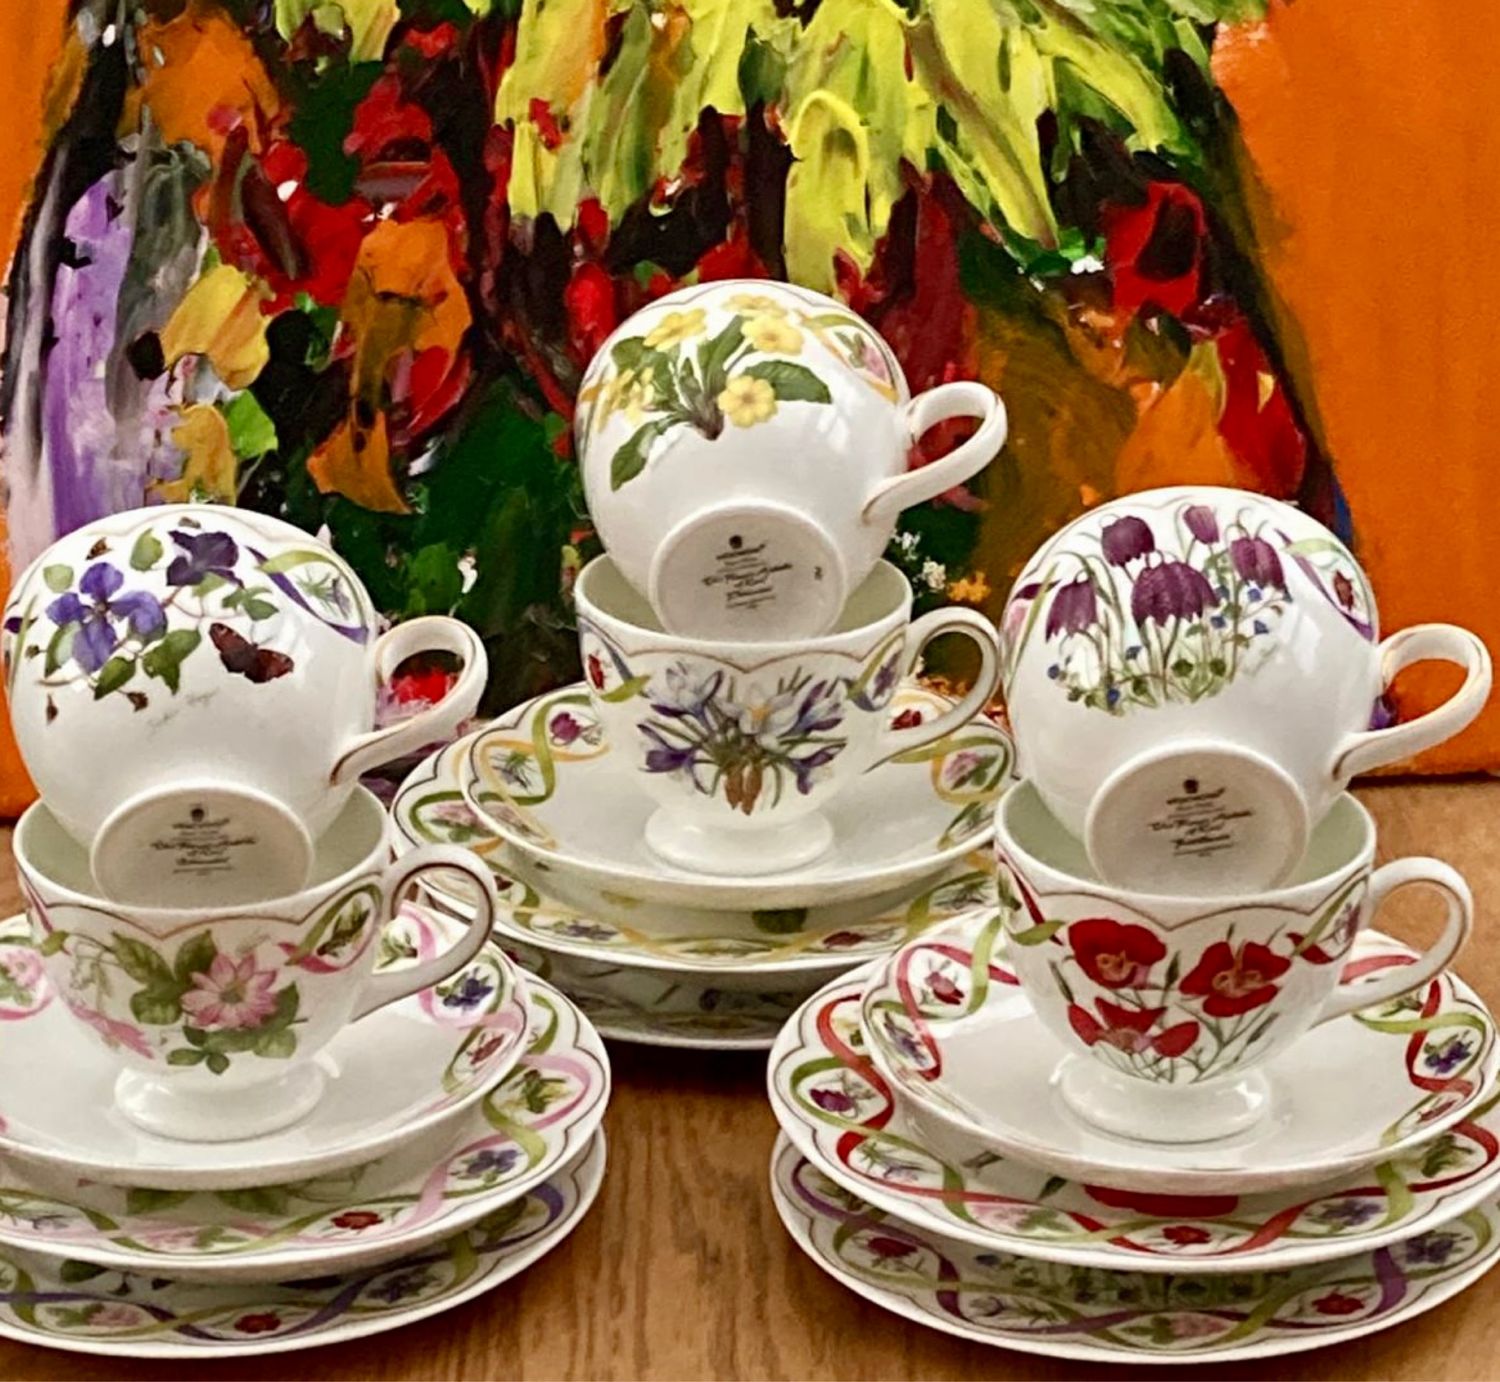 Трио цветов. Чайное трио Валлендорф. Валлендорф фарфор чайное трио. Цветочное трио посуда реклама. Как красиво поставить чайное трио.